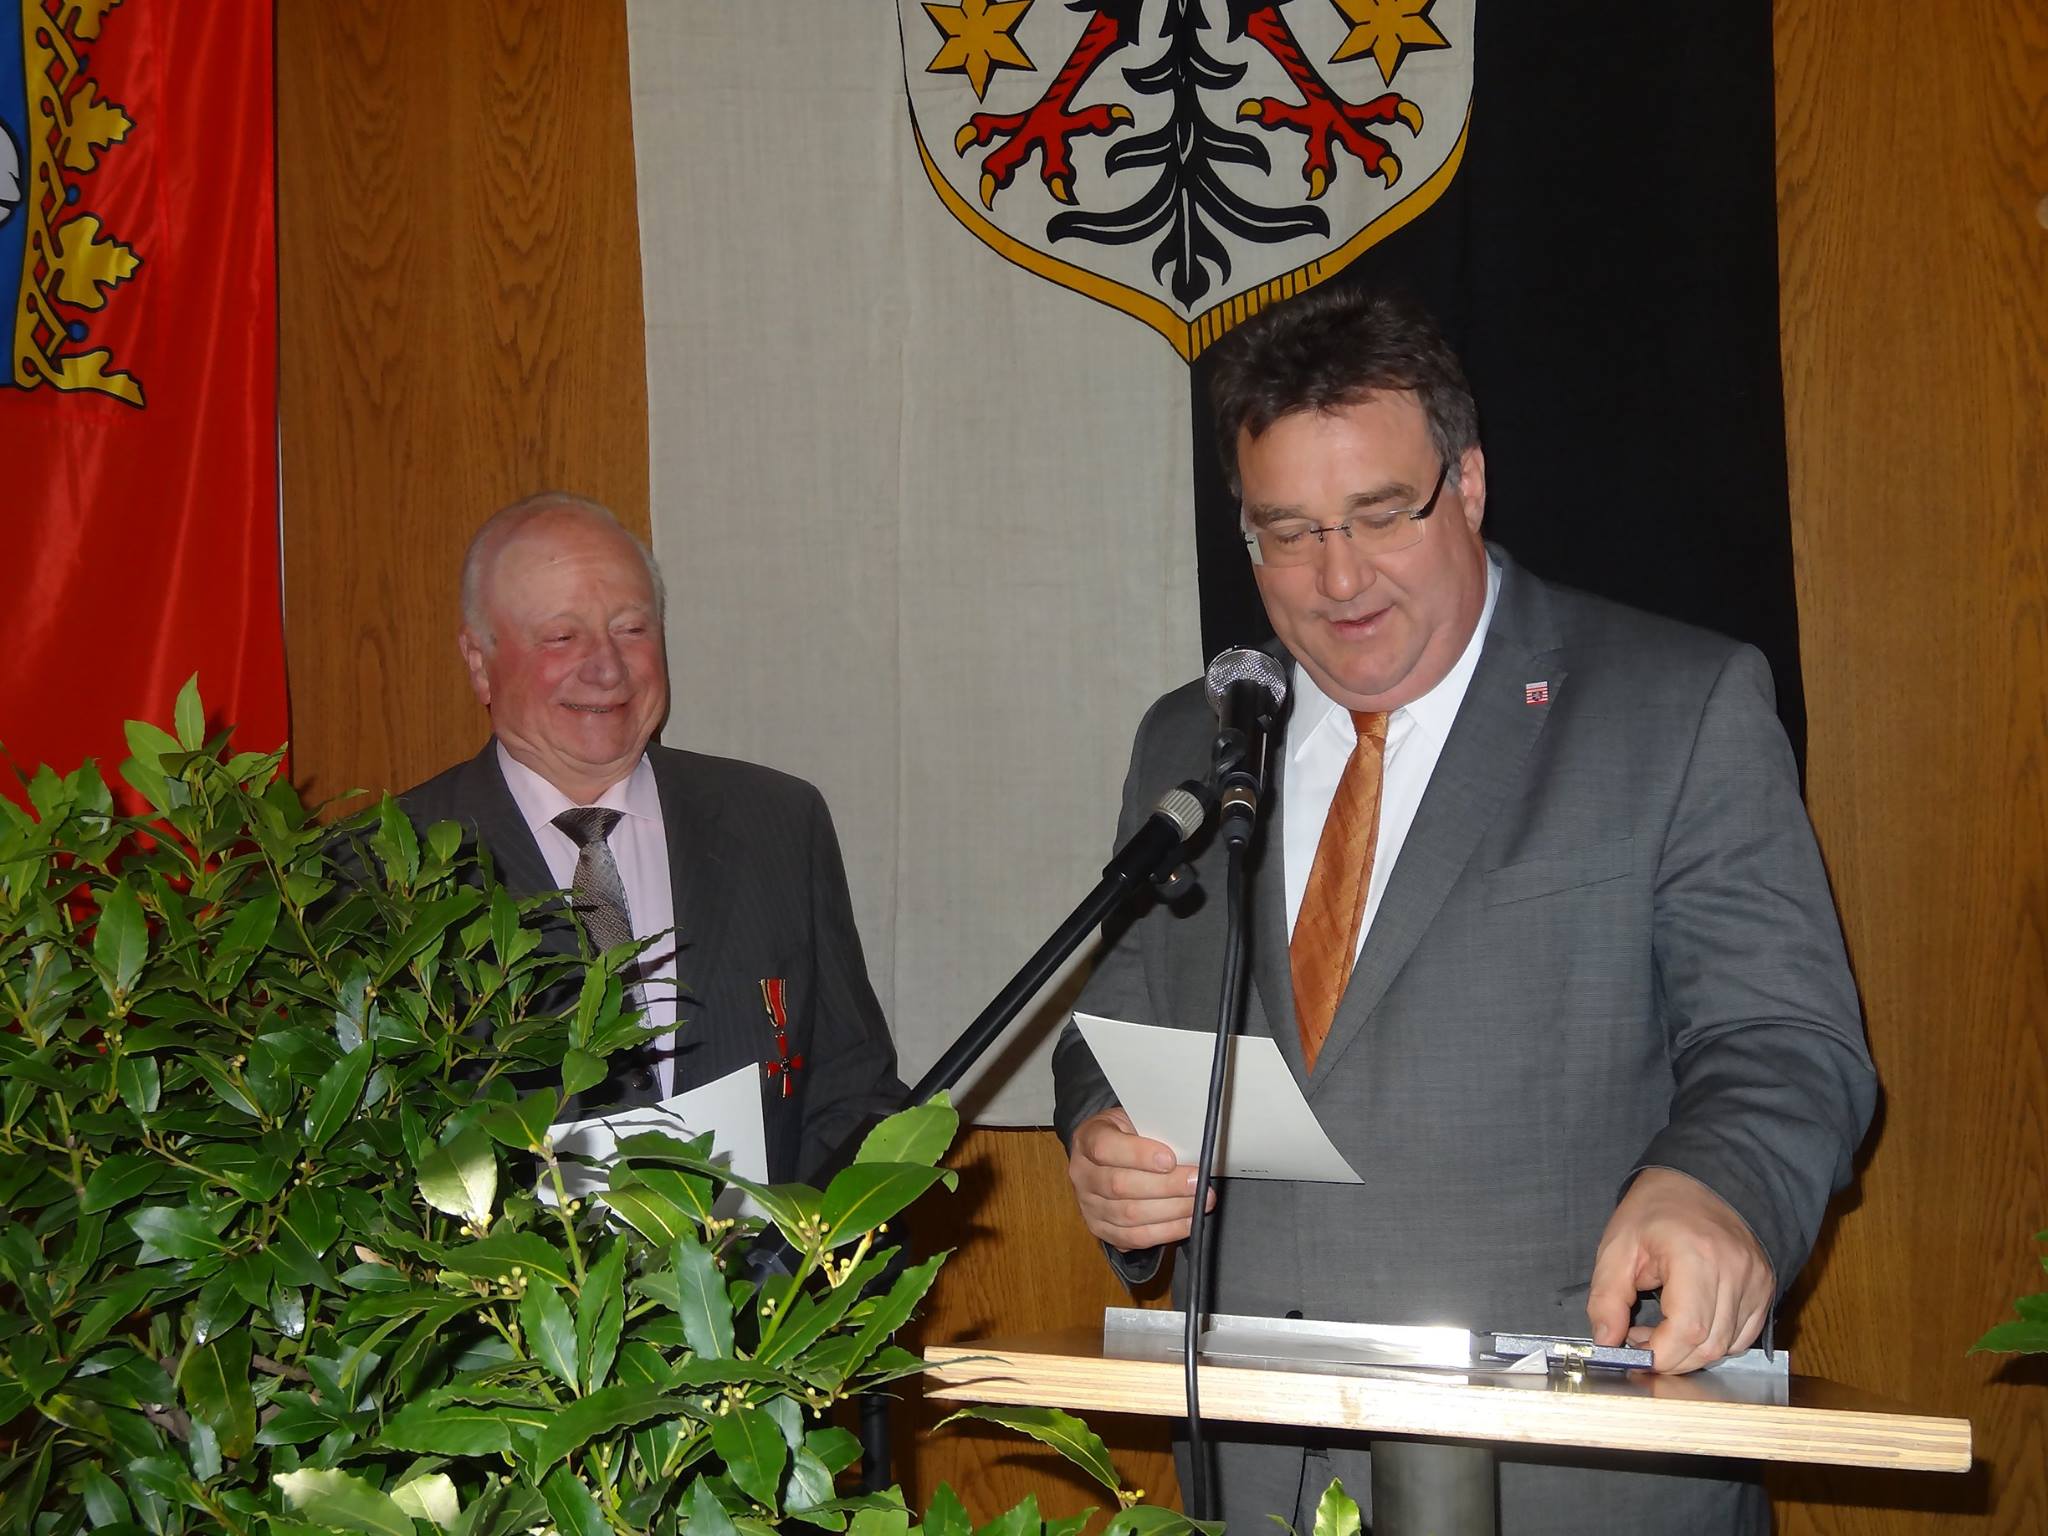 Verleihung des Bundesverdienstkreuzes an Norbert Otto 2017